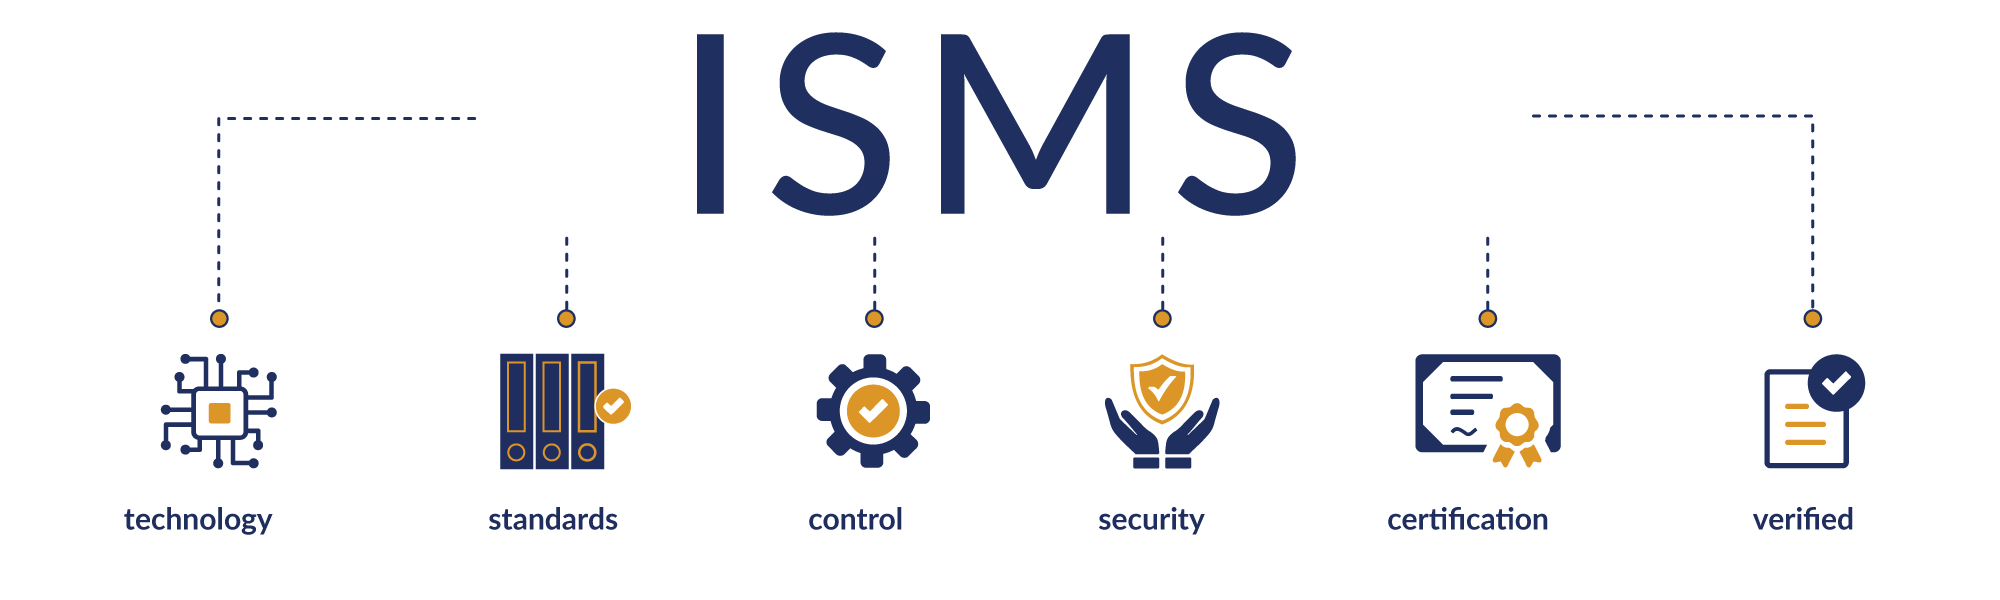 ISMS software